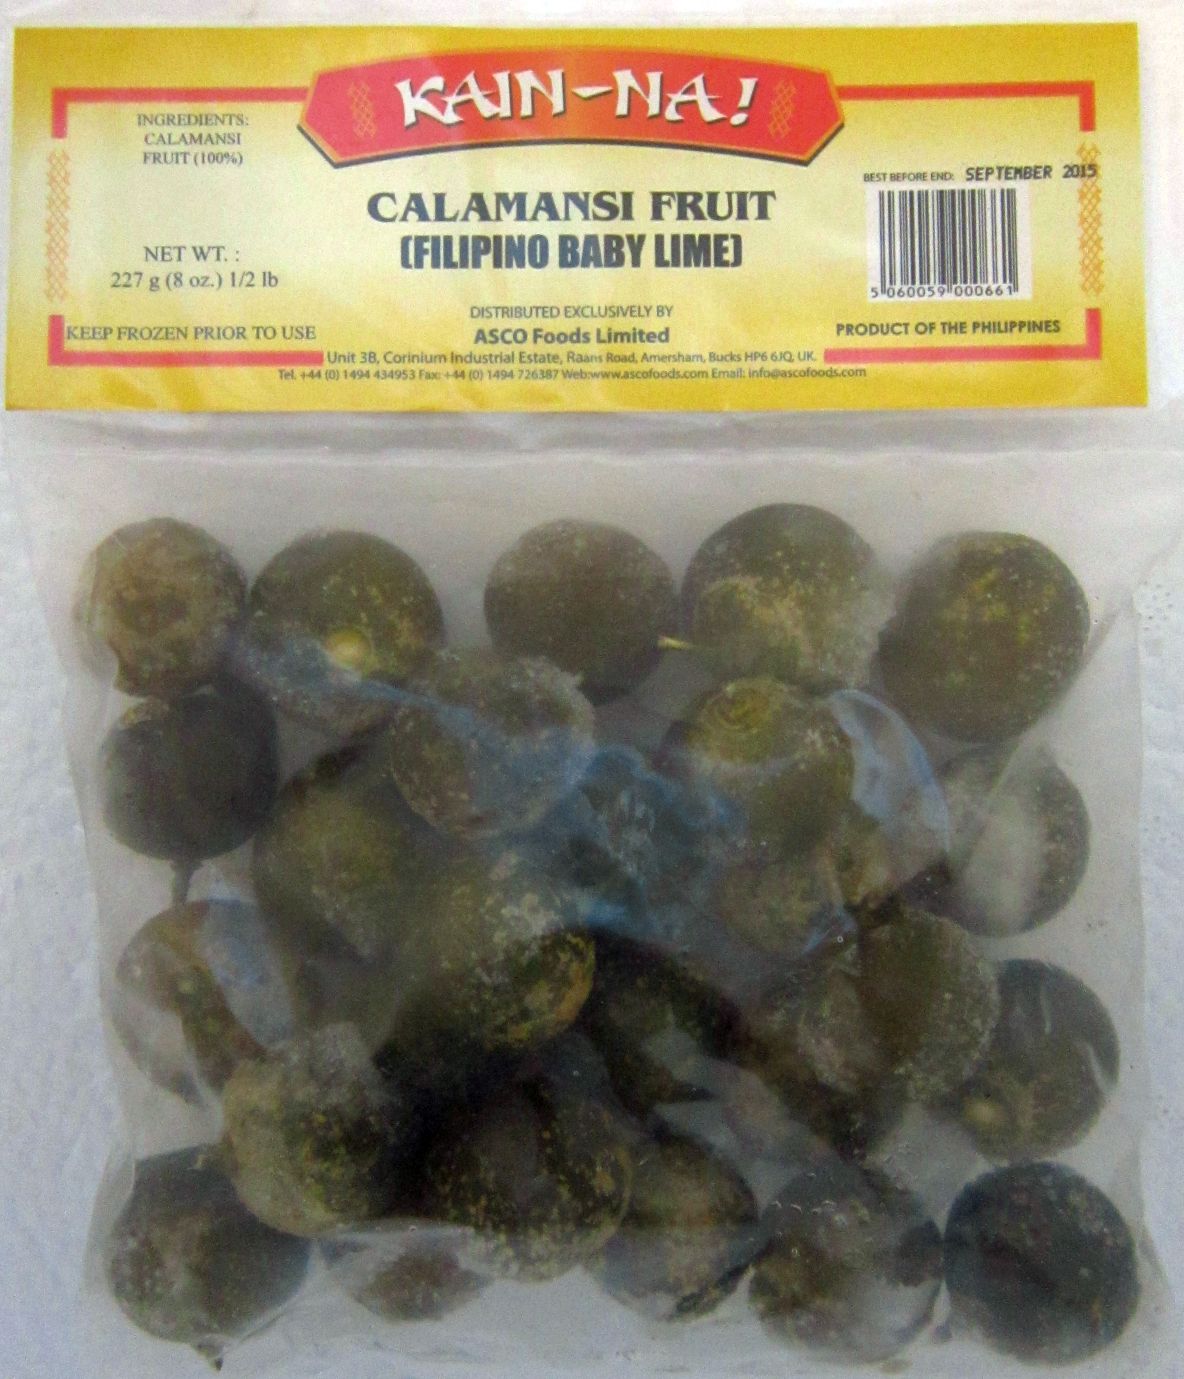 Kain-Na Calamansi Fruit (Filipino Baby Lime) Image